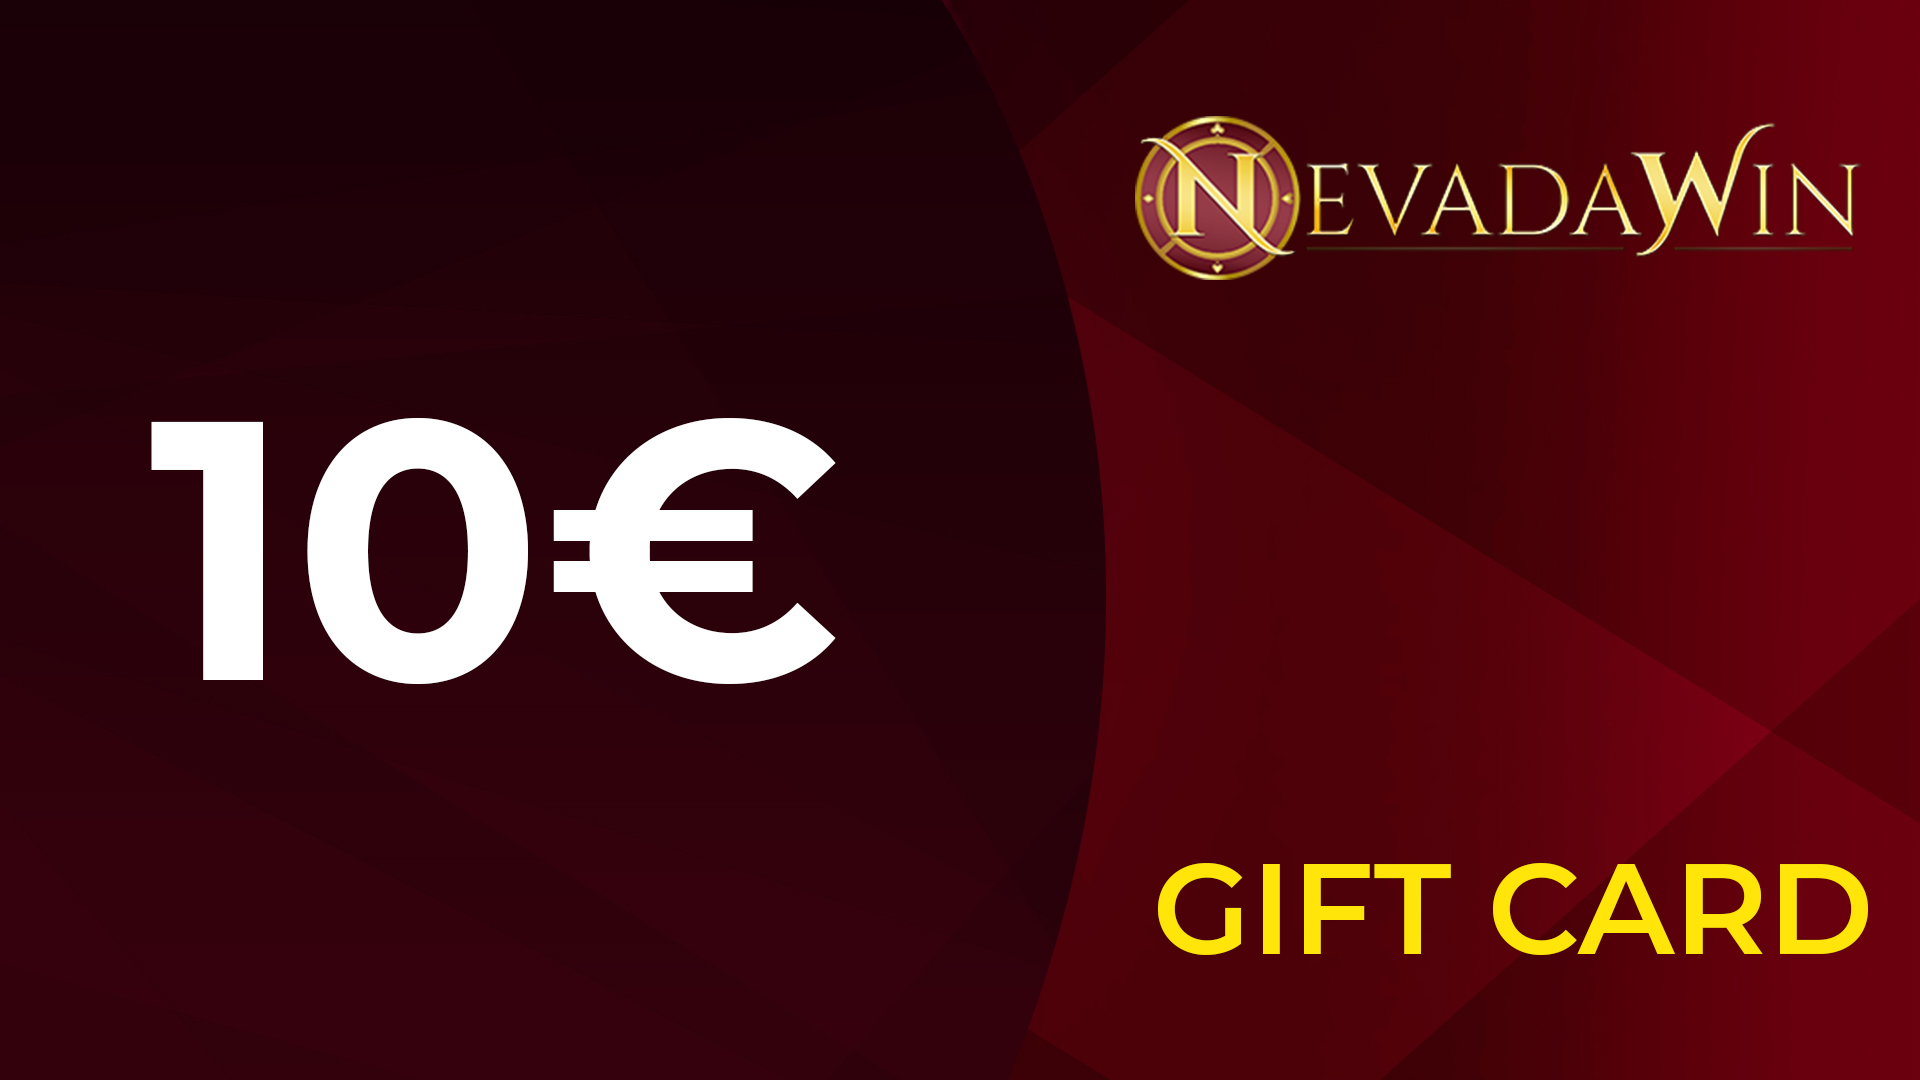 NevadaWin €10 Giftcard [$ 10.99]